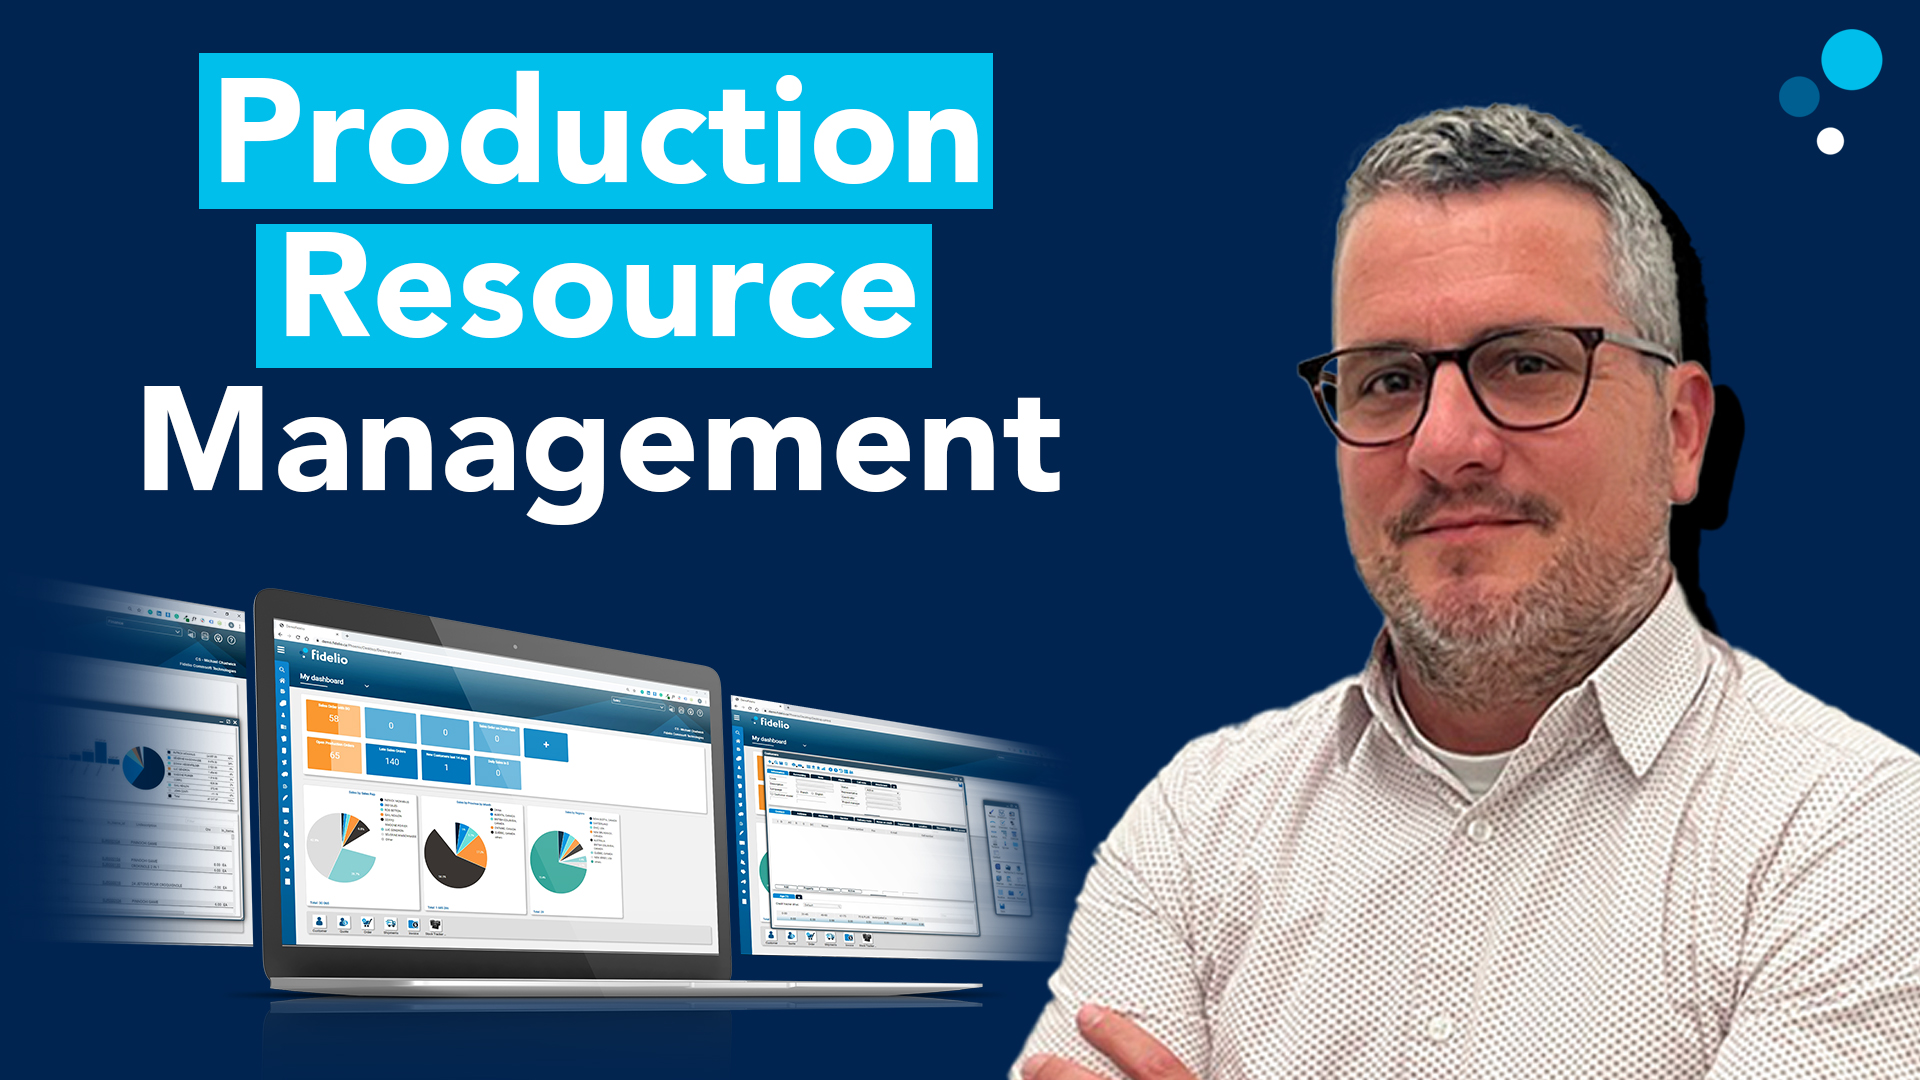 Production Resource Management